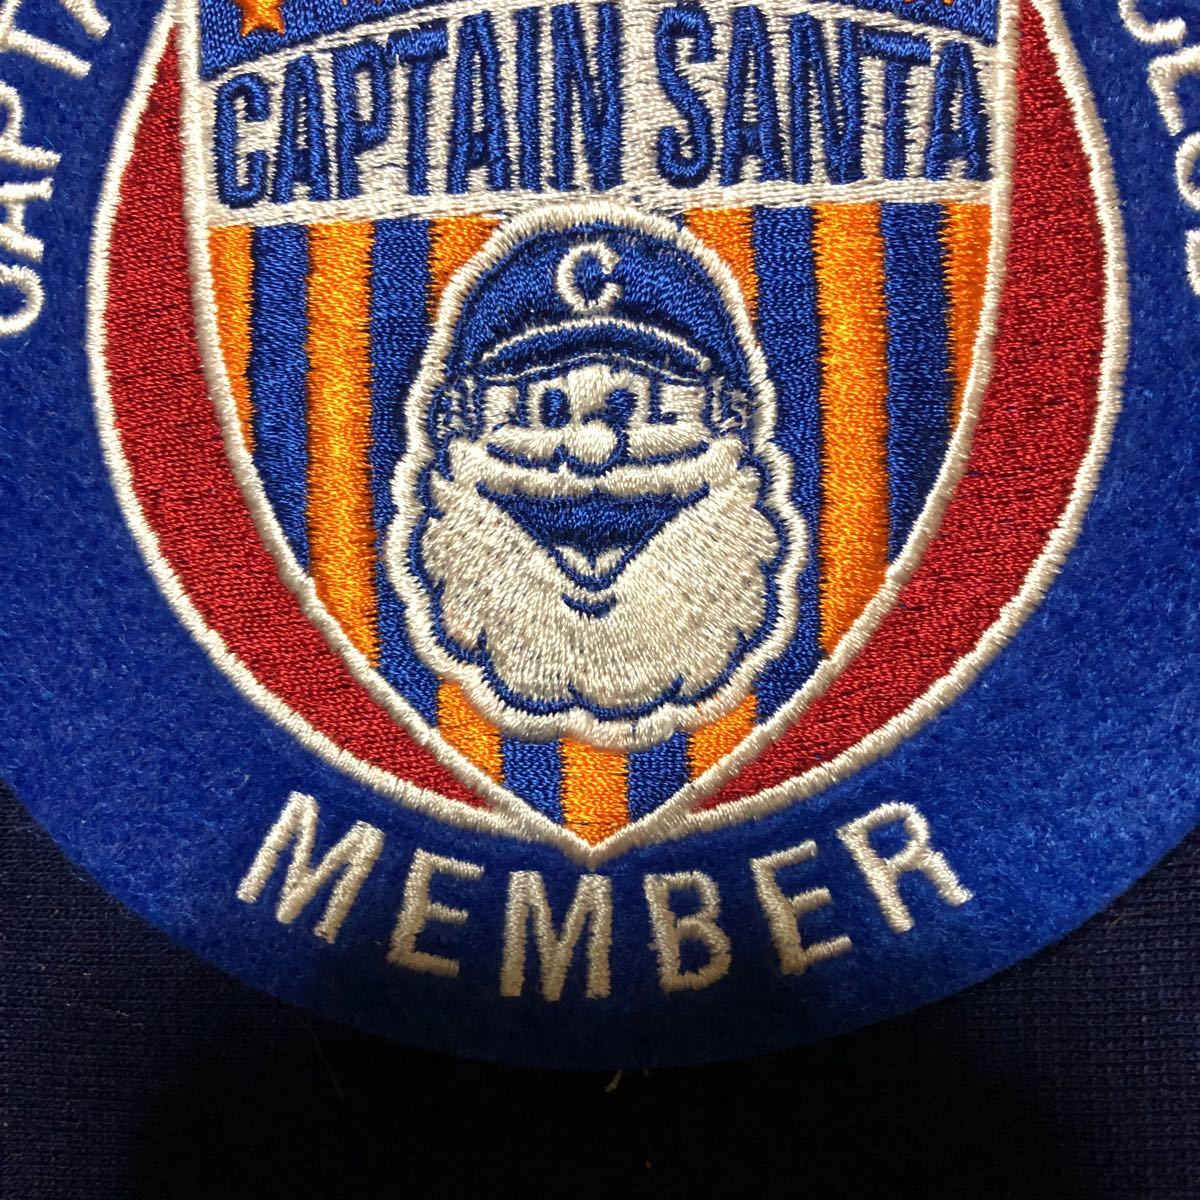  ultra rare rare goods Captain Santa sport glove CAPTAIN SANTA SPORTS CLUB badge blue 